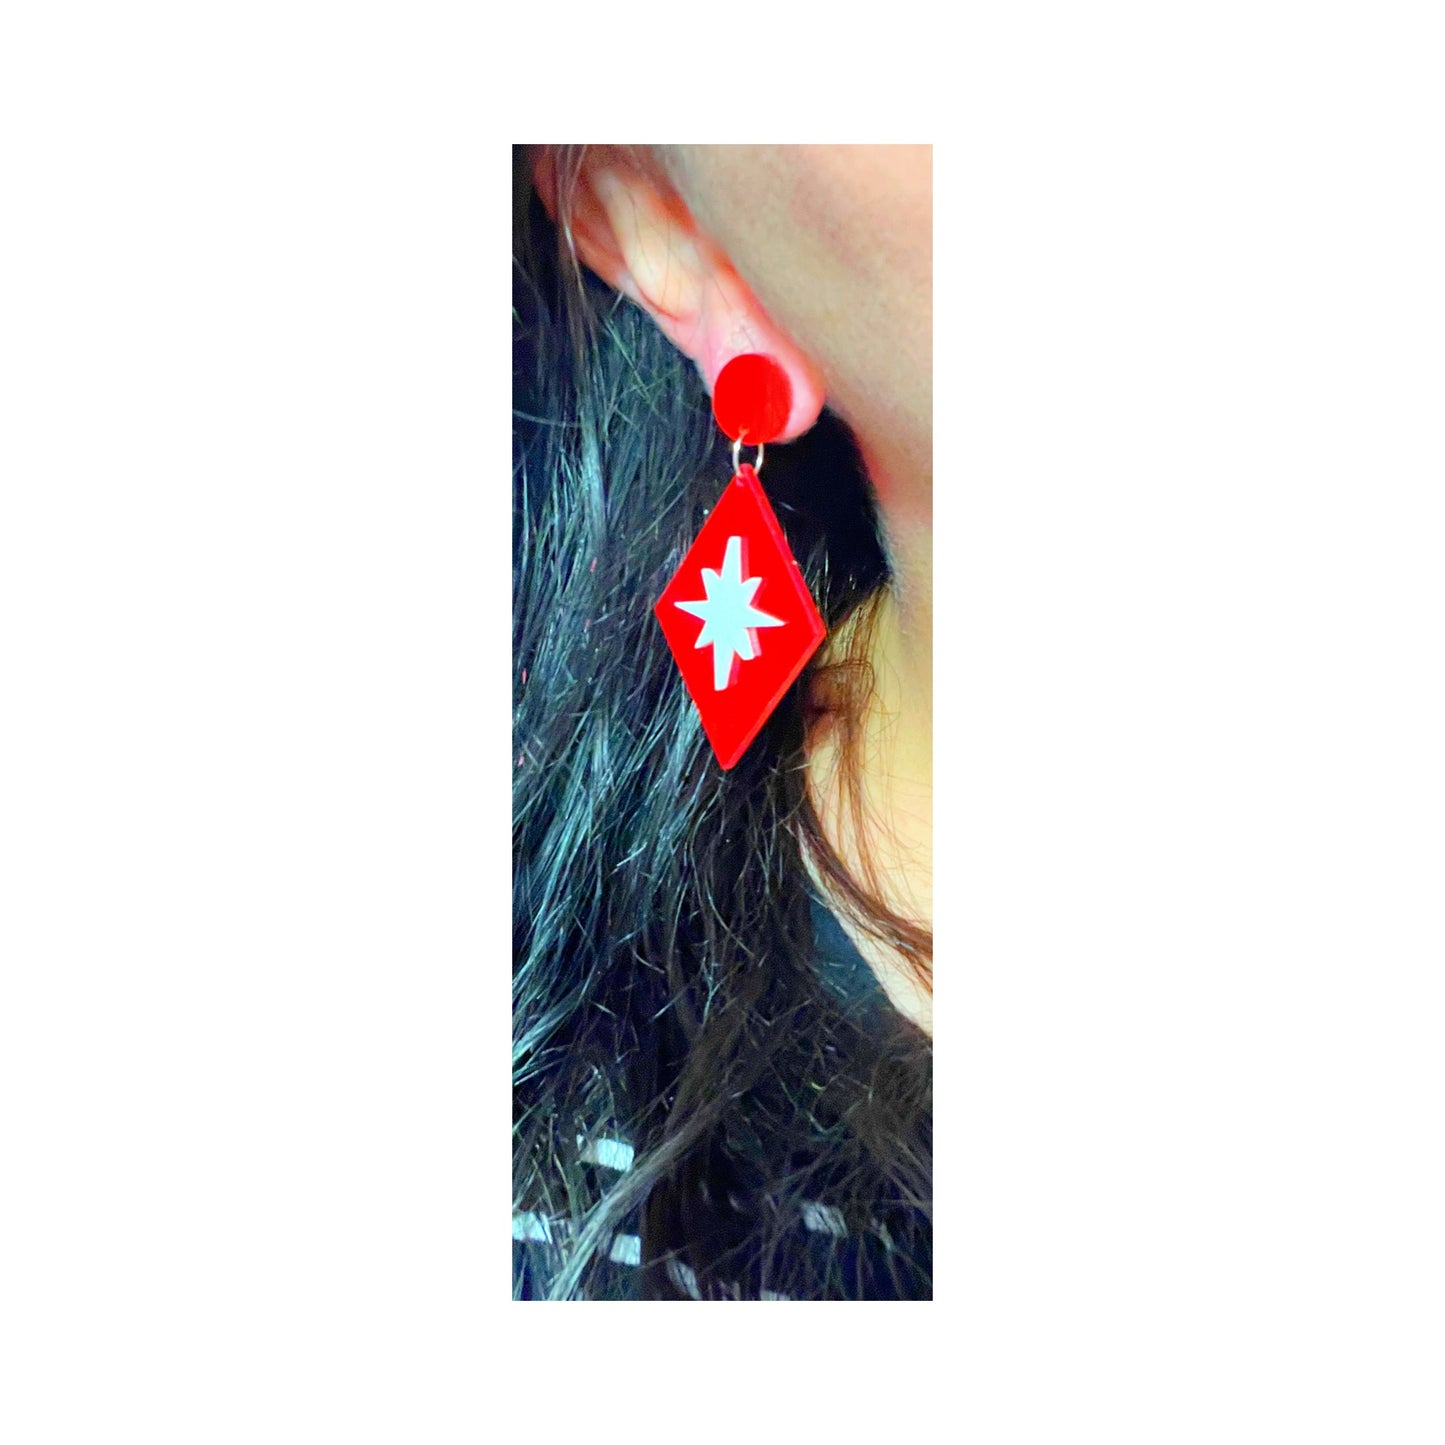 Red & White Atomic Retro Twinkle Drop Earrings